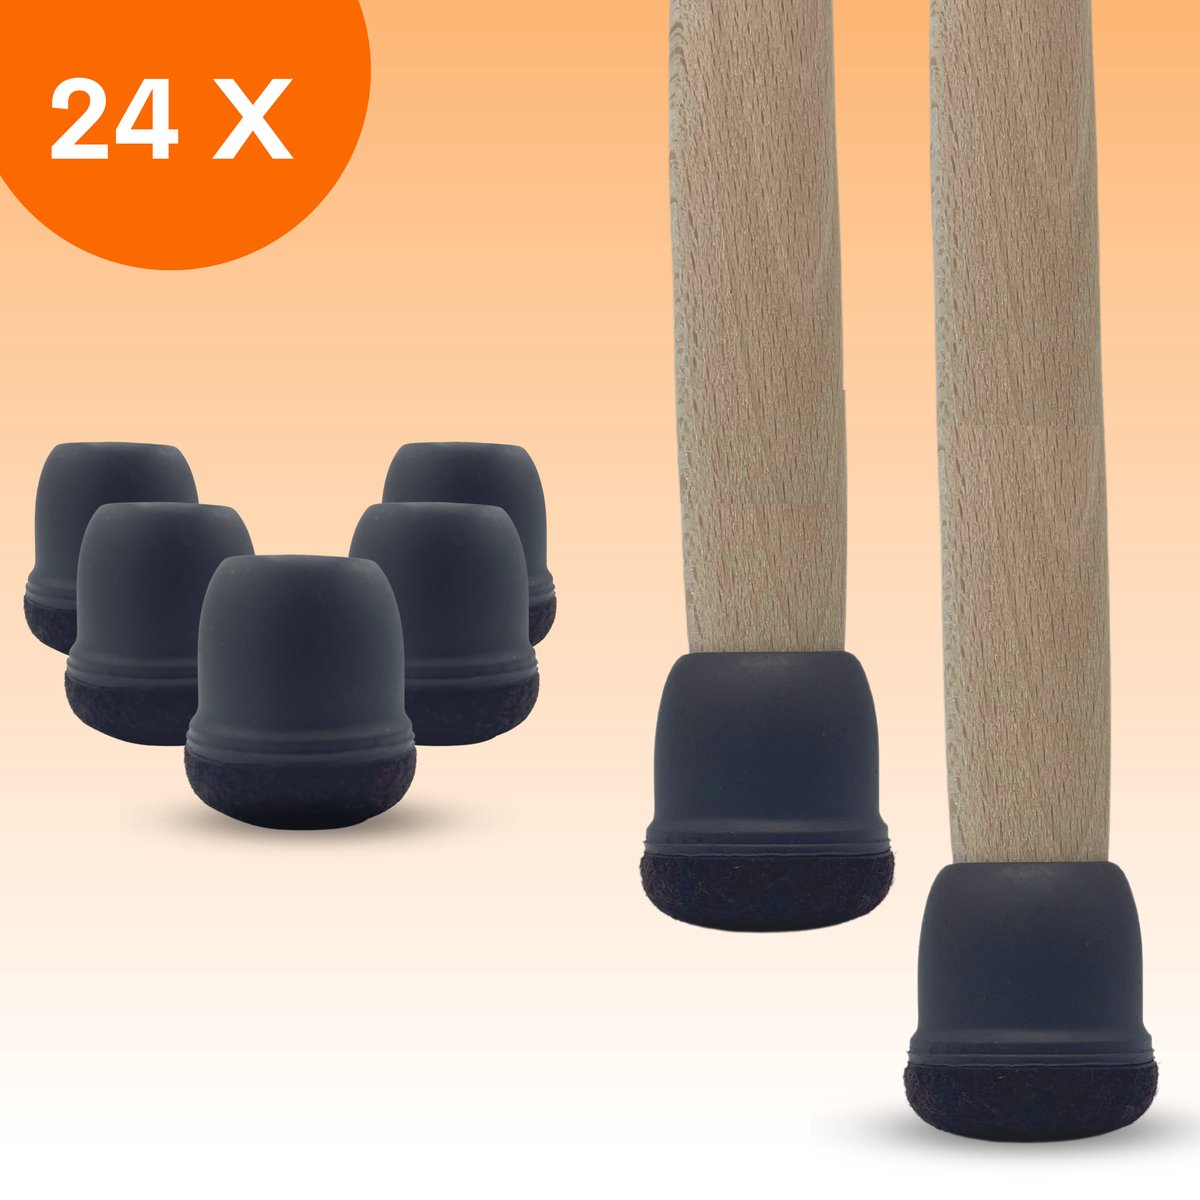 FLOOQ - Couvre-jambes de chaise - 30-35mm - avec Feutre anti-rayures -  Protège-jambes